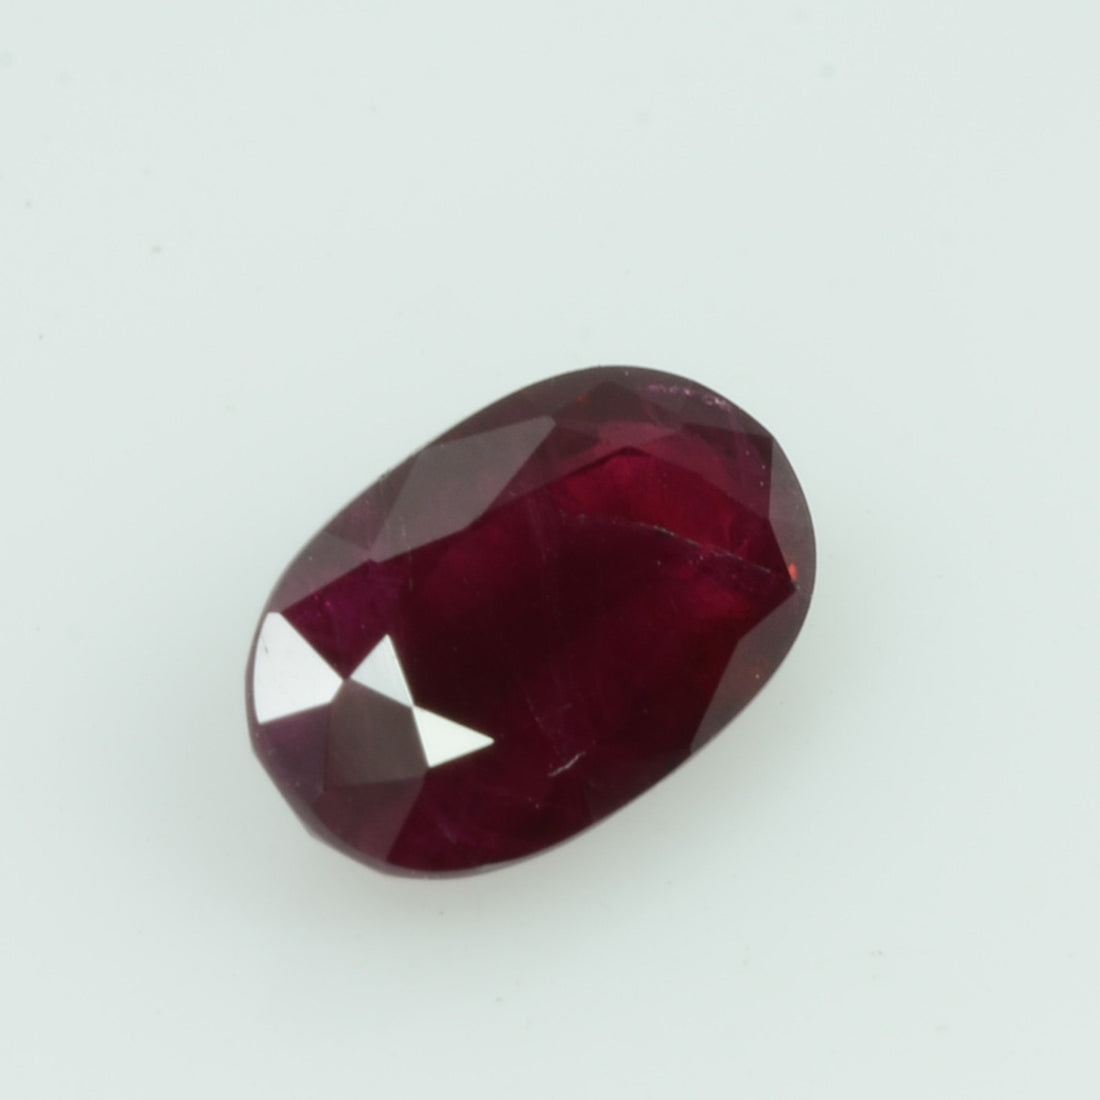 1.00 Cts Natural Burma Ruby Loose Gemstone Oval Cut - Thai Gems Export Ltd.